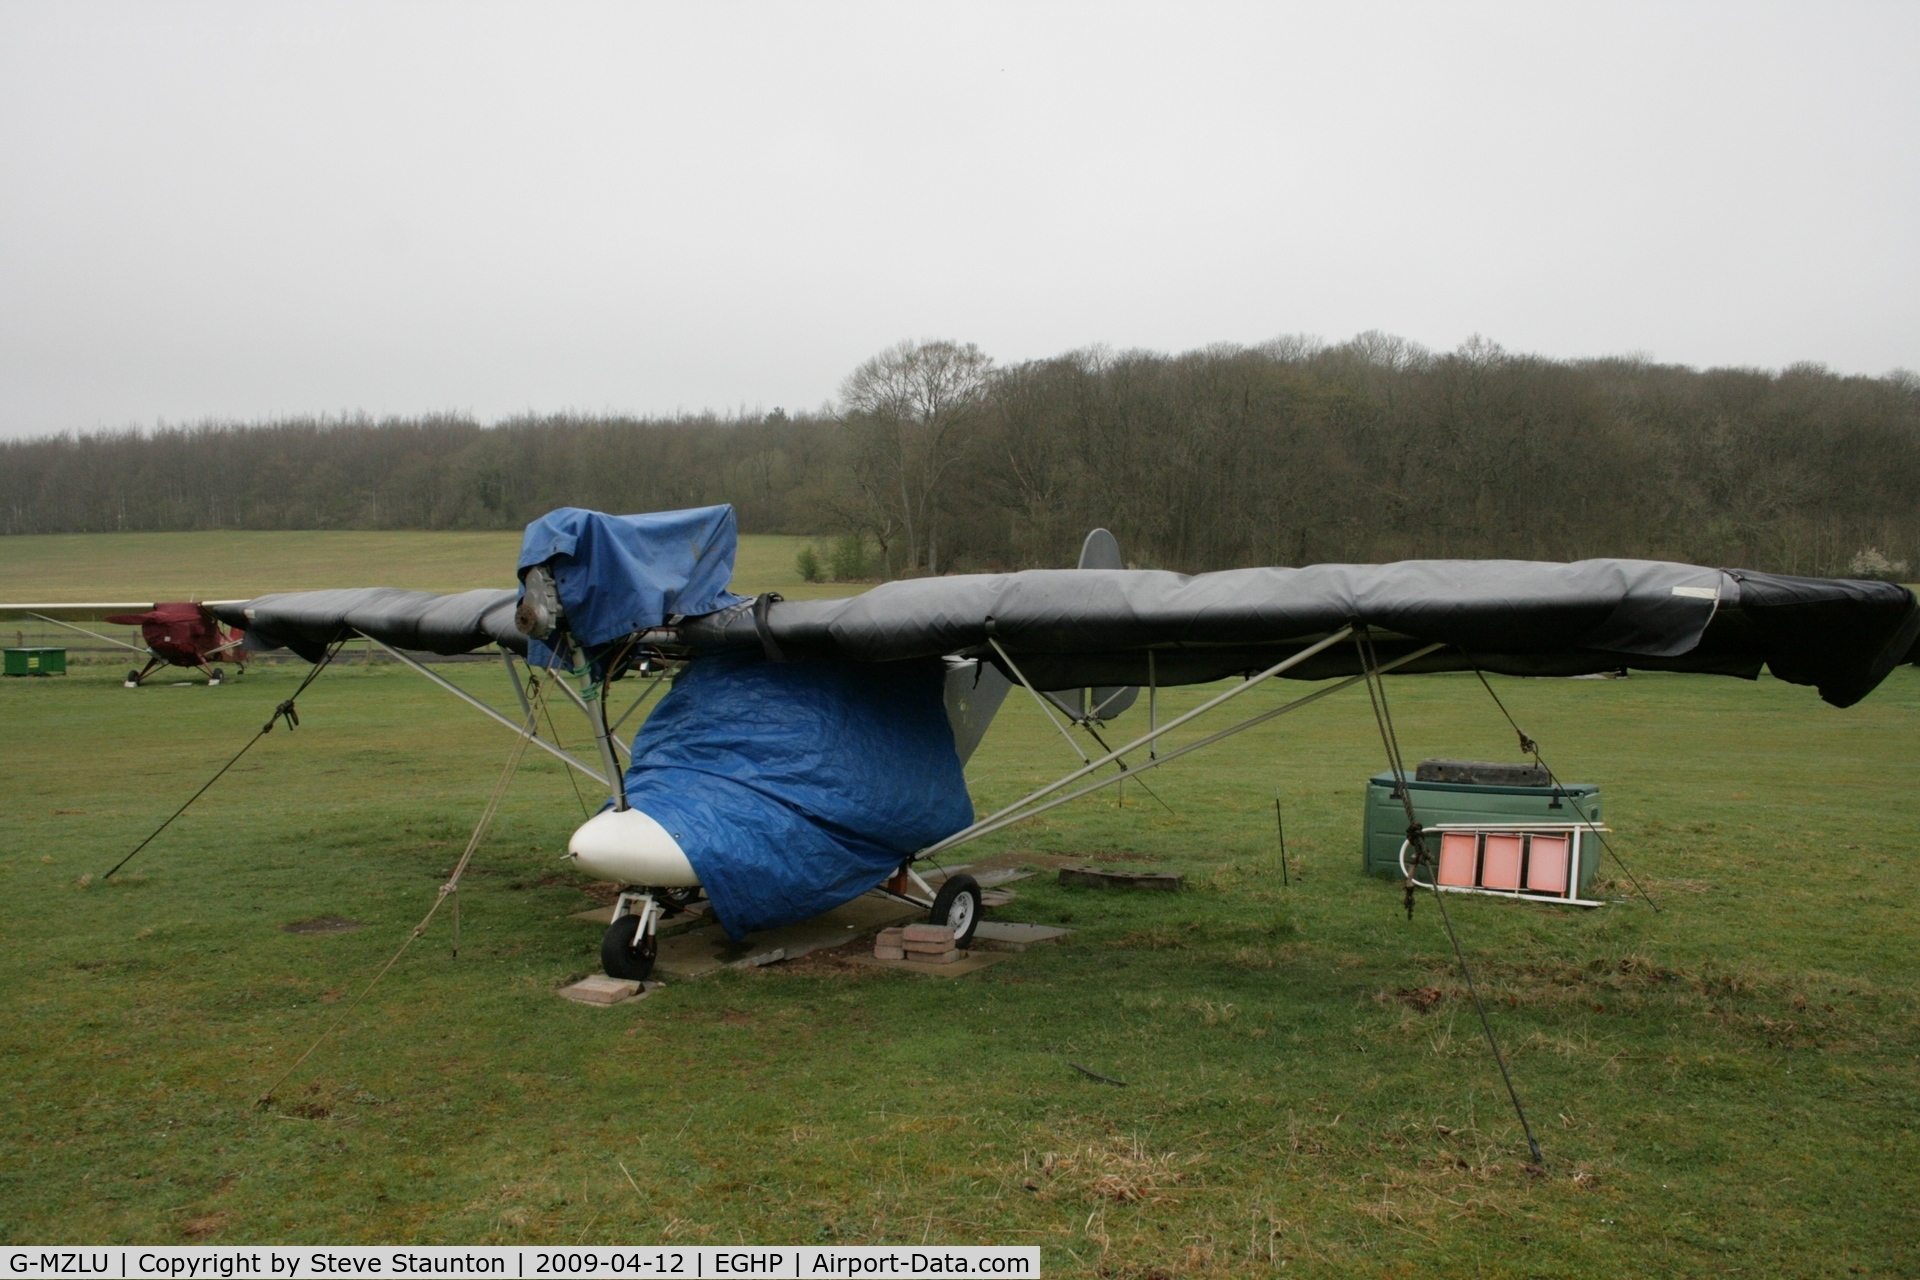 G-MZLU, 1998 Cyclone AX2000 C/N 7439, Taken at Popham Airfield, England on a gloomy April Sunday (12/04/09)